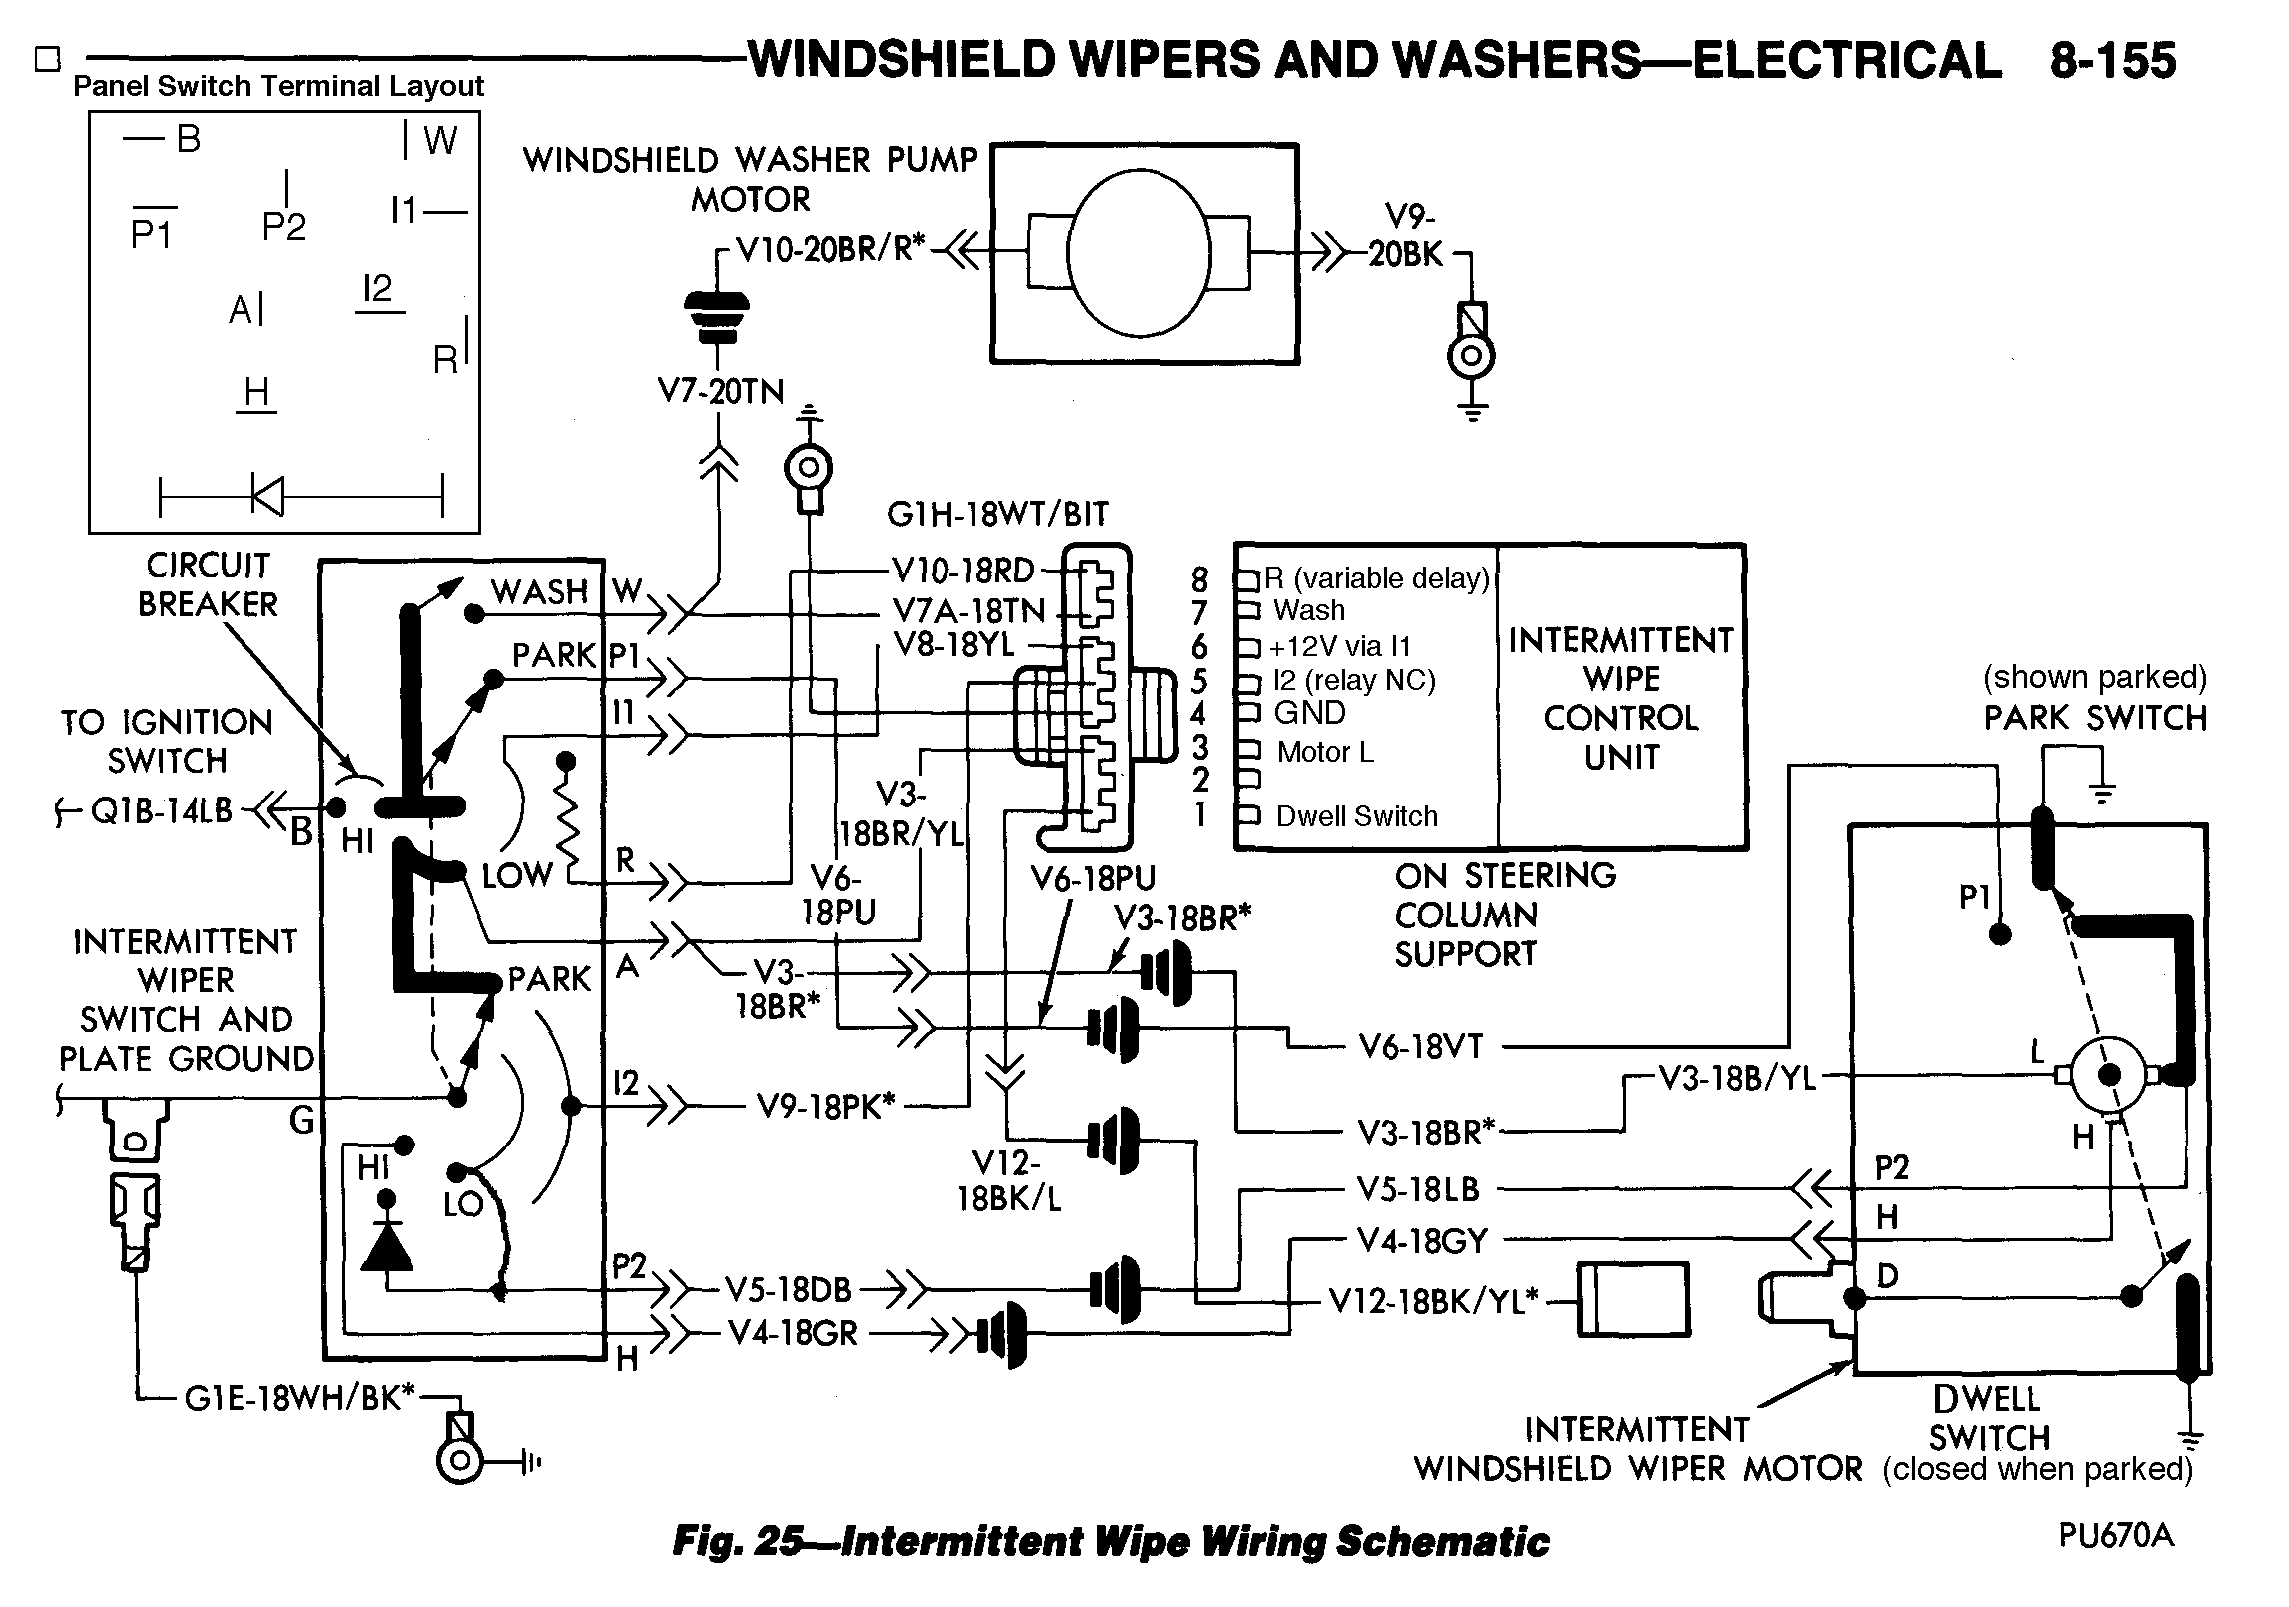 Universal Wiper Switch Wiring Diagram - Drivenheisenberg